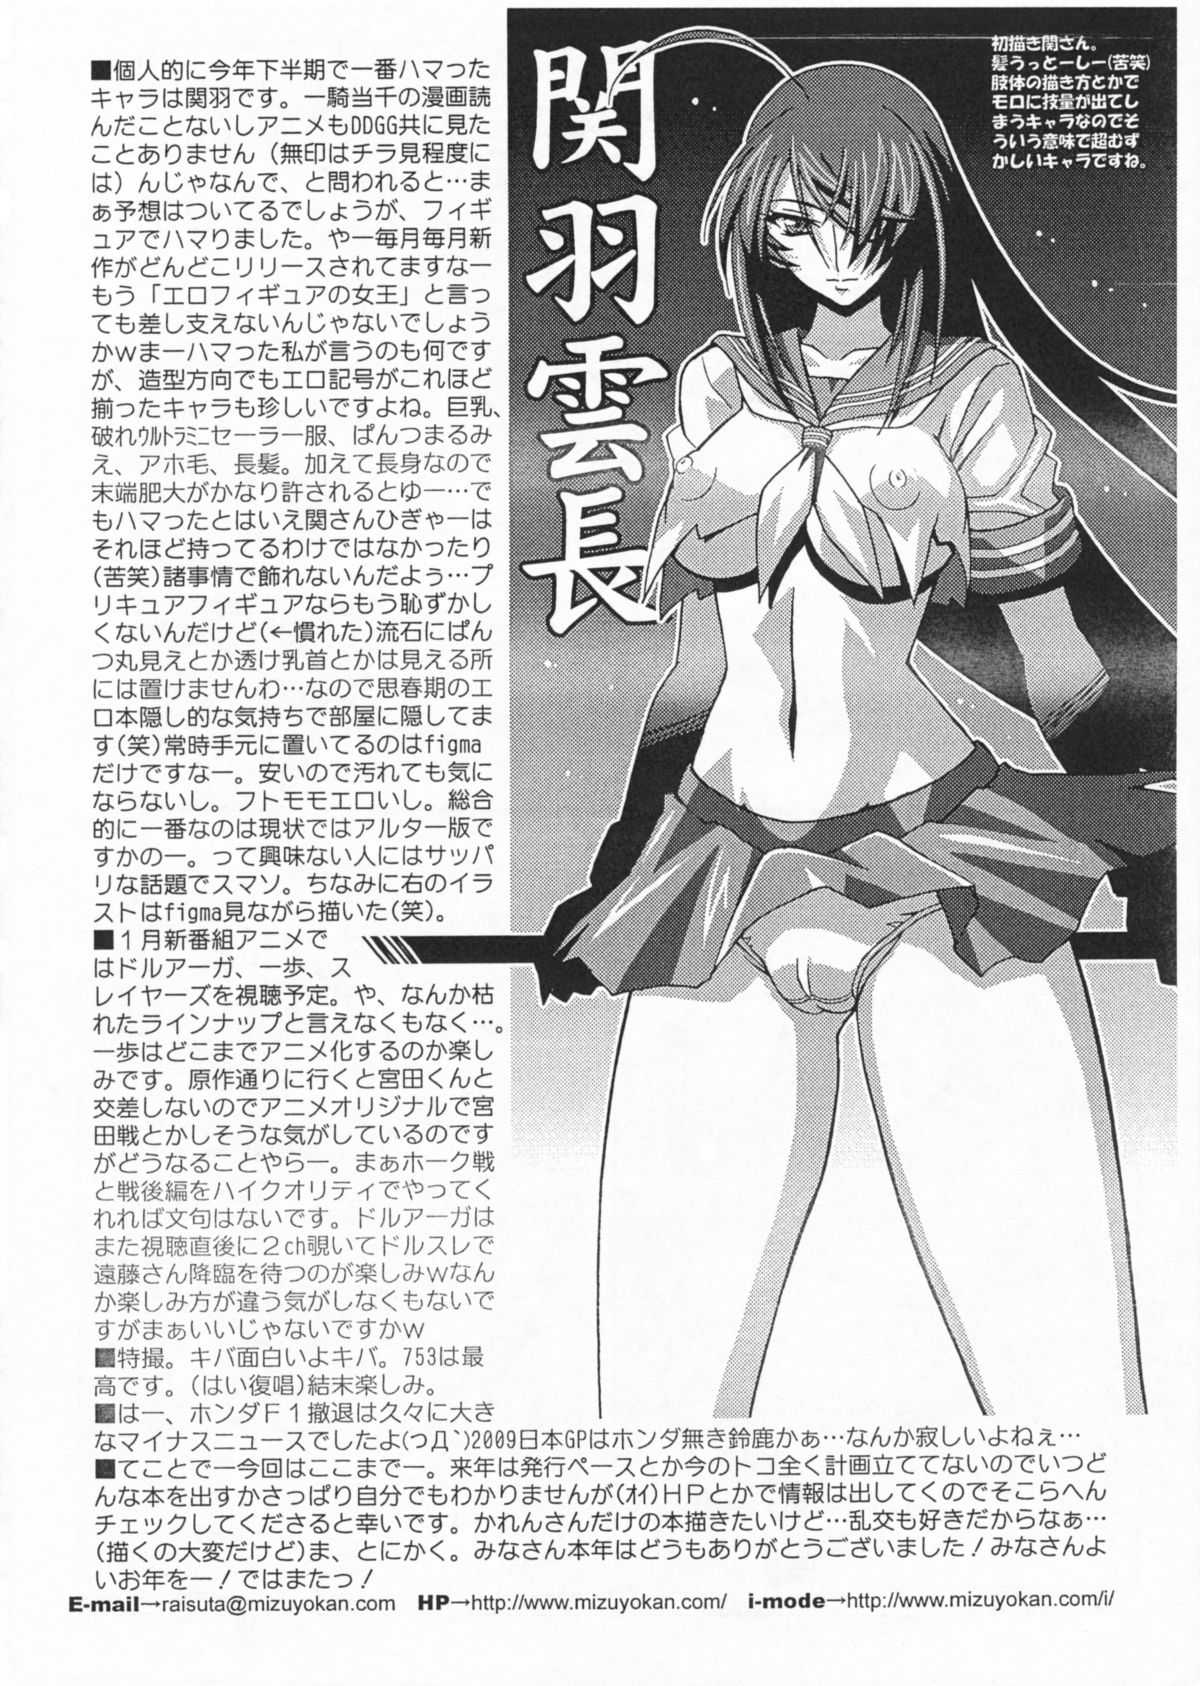 [Mizuyokan Brand] Raisuta News. Vol.143 